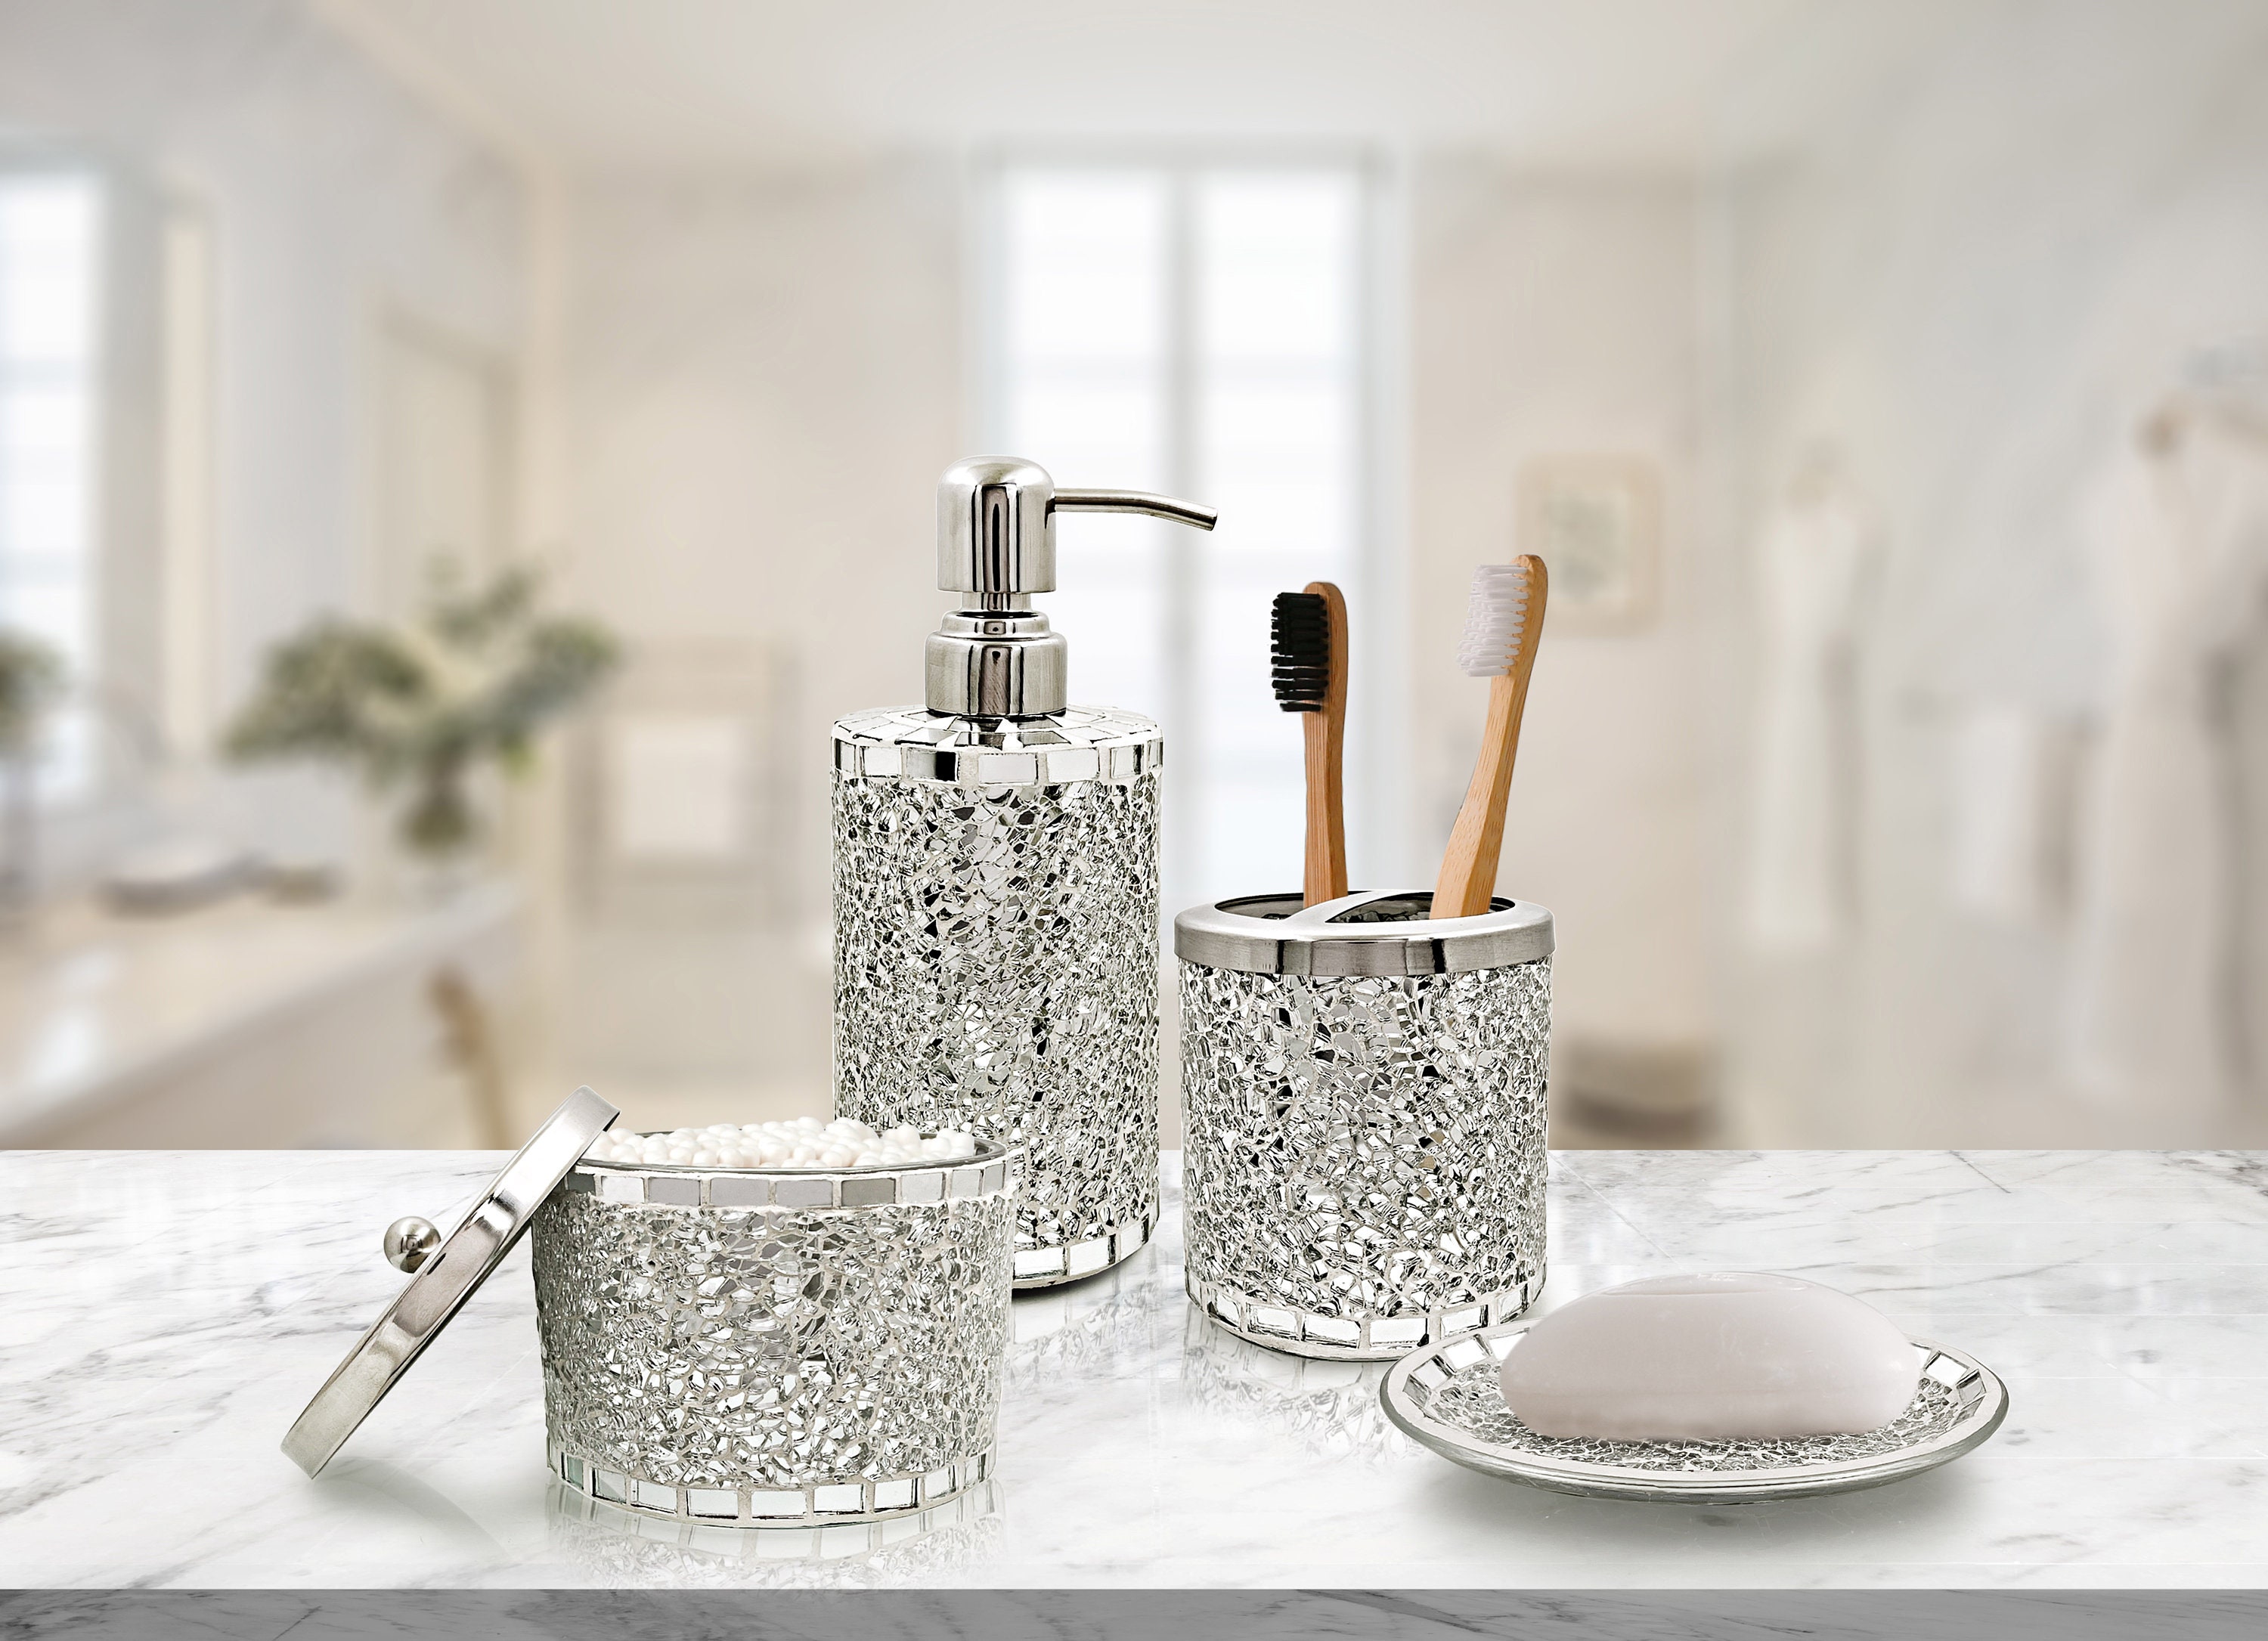 Shower & Glass Squeege - White, Bathroom Accessories